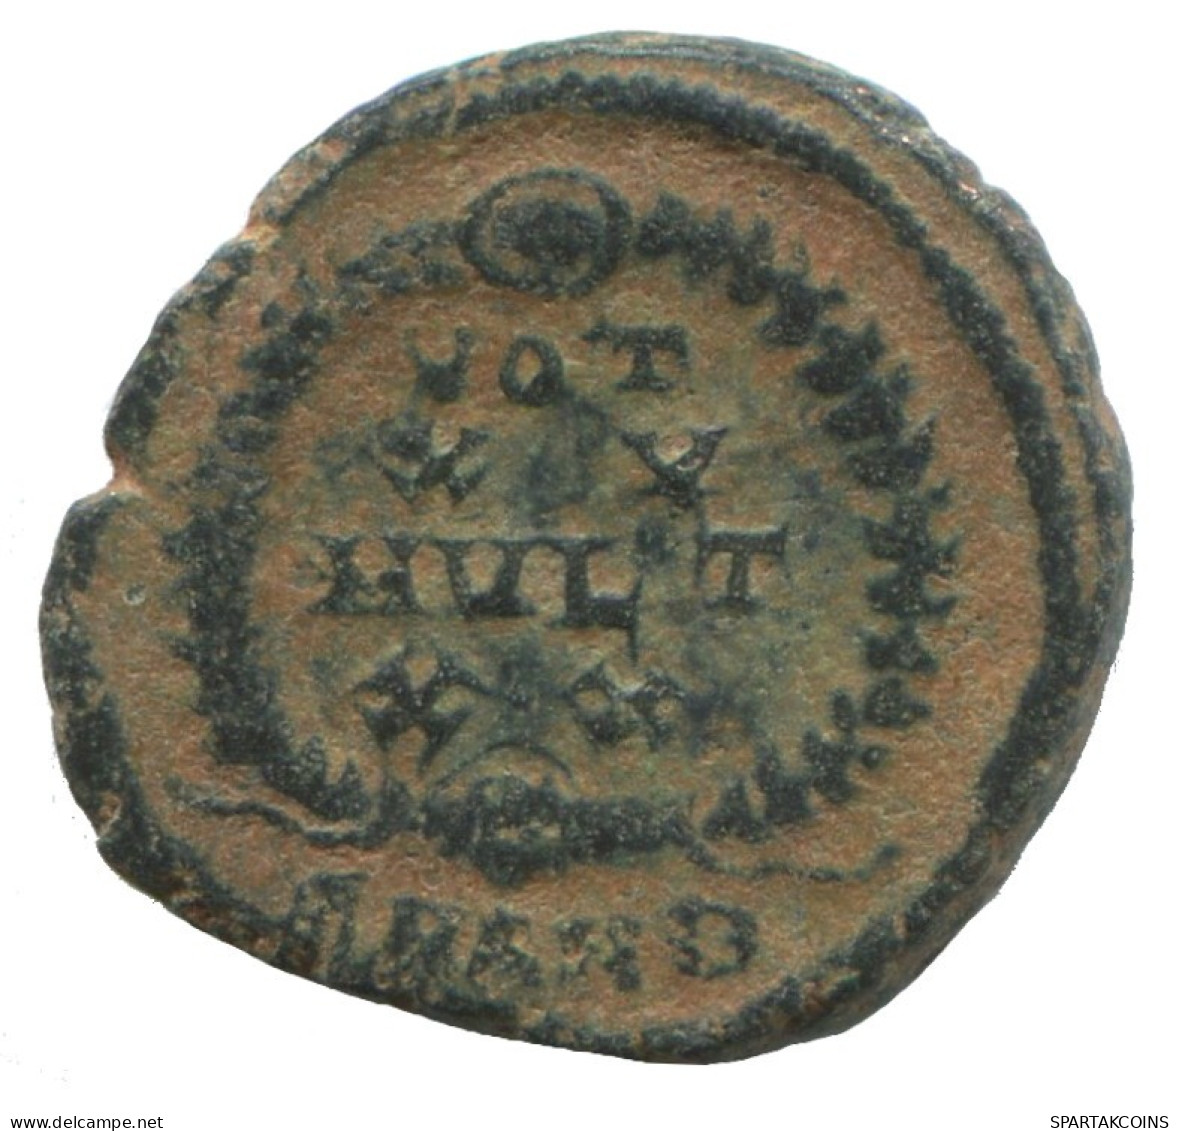 CONSTANTIUS II AD347-348 VOT XX MVLT XX 1.6g/15mm #ANN1479.10.F.A - El Imperio Christiano (307 / 363)